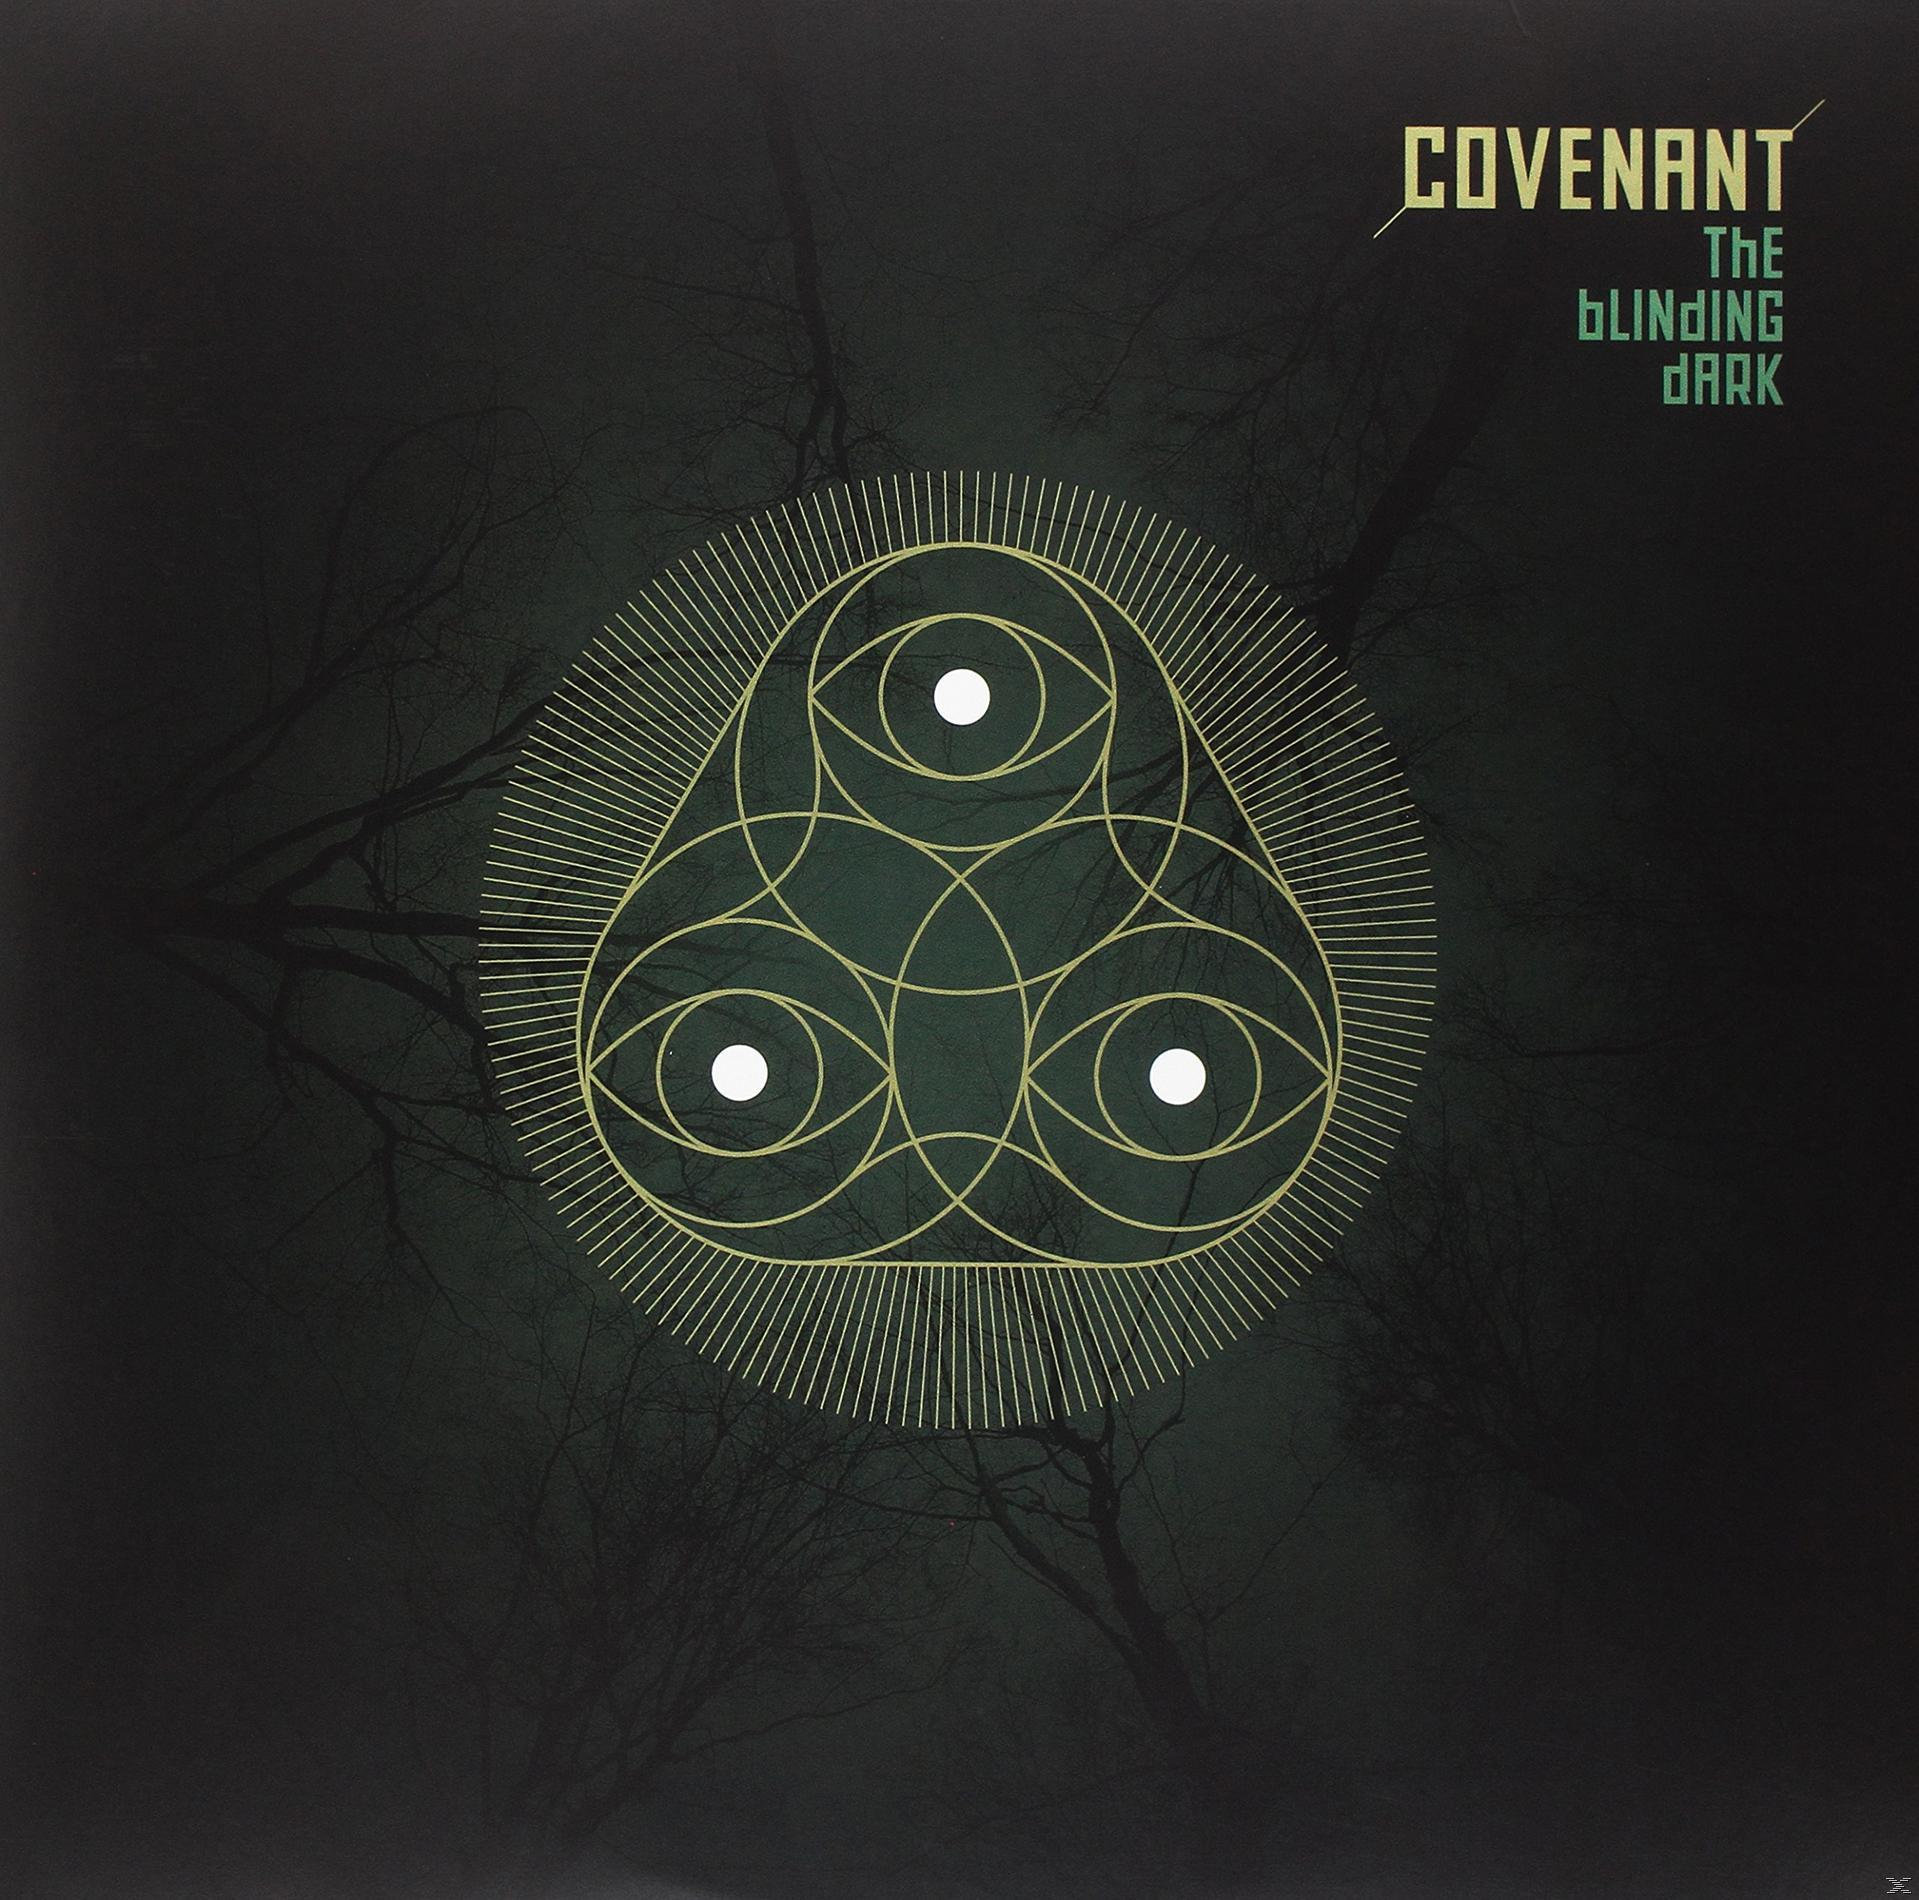 The - Blinding (Limited Edition) Dark - Covenant (Vinyl)